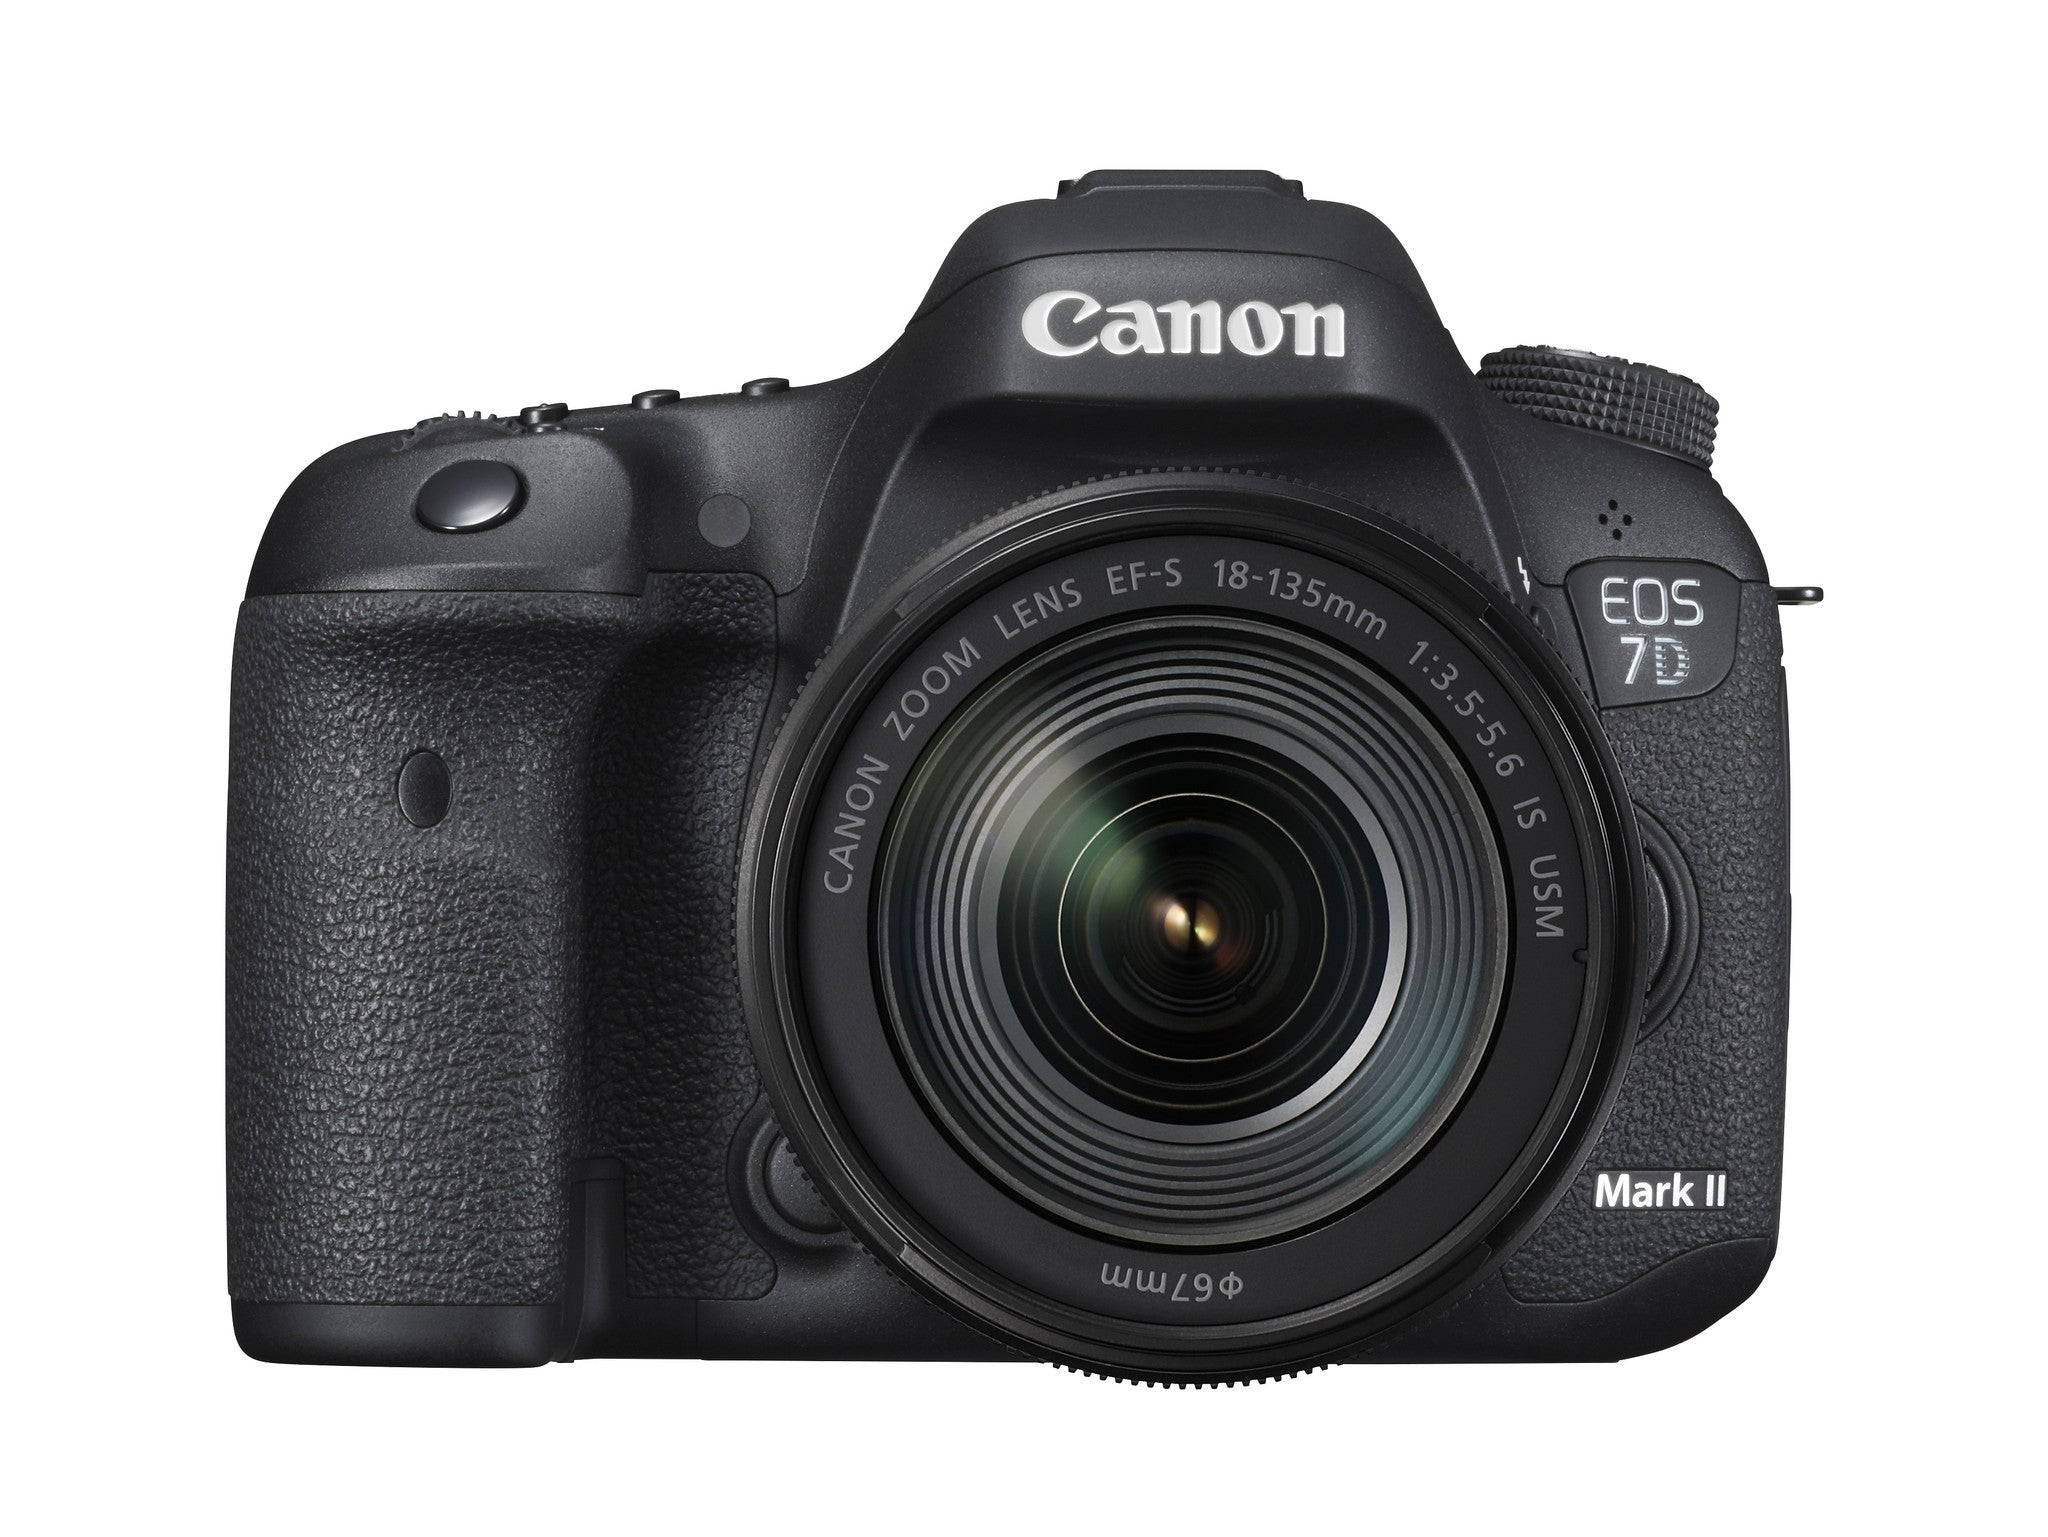 Canon EOS 7D Mark II EF-S 18-135mm f/3.5-5.6 IS USM Digital SLR Camera Wi-Fi Adapter Kit, camera dslr cameras, Canon - Pictureline  - 4